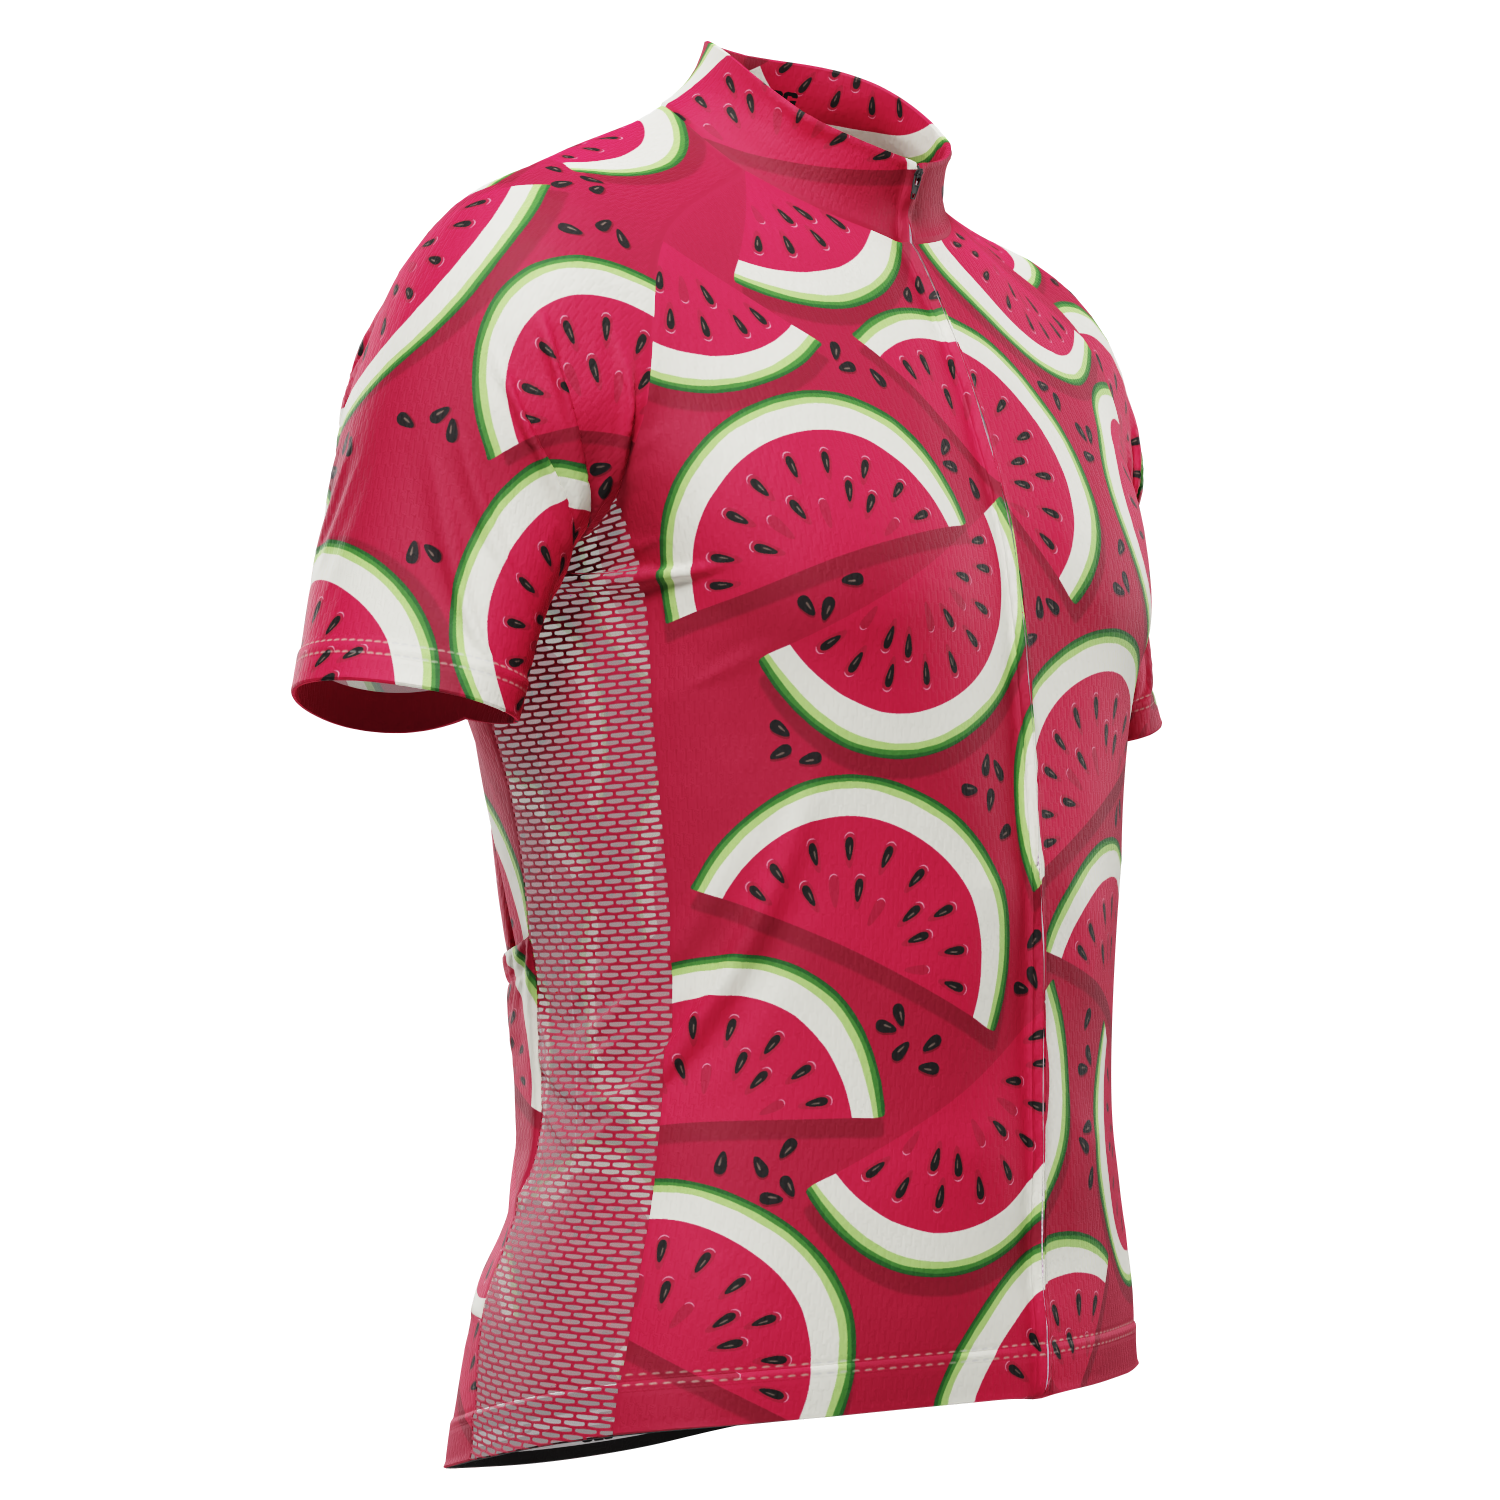 Men's Full Watermelon Fruity Short Sleeve Cycling Jersey